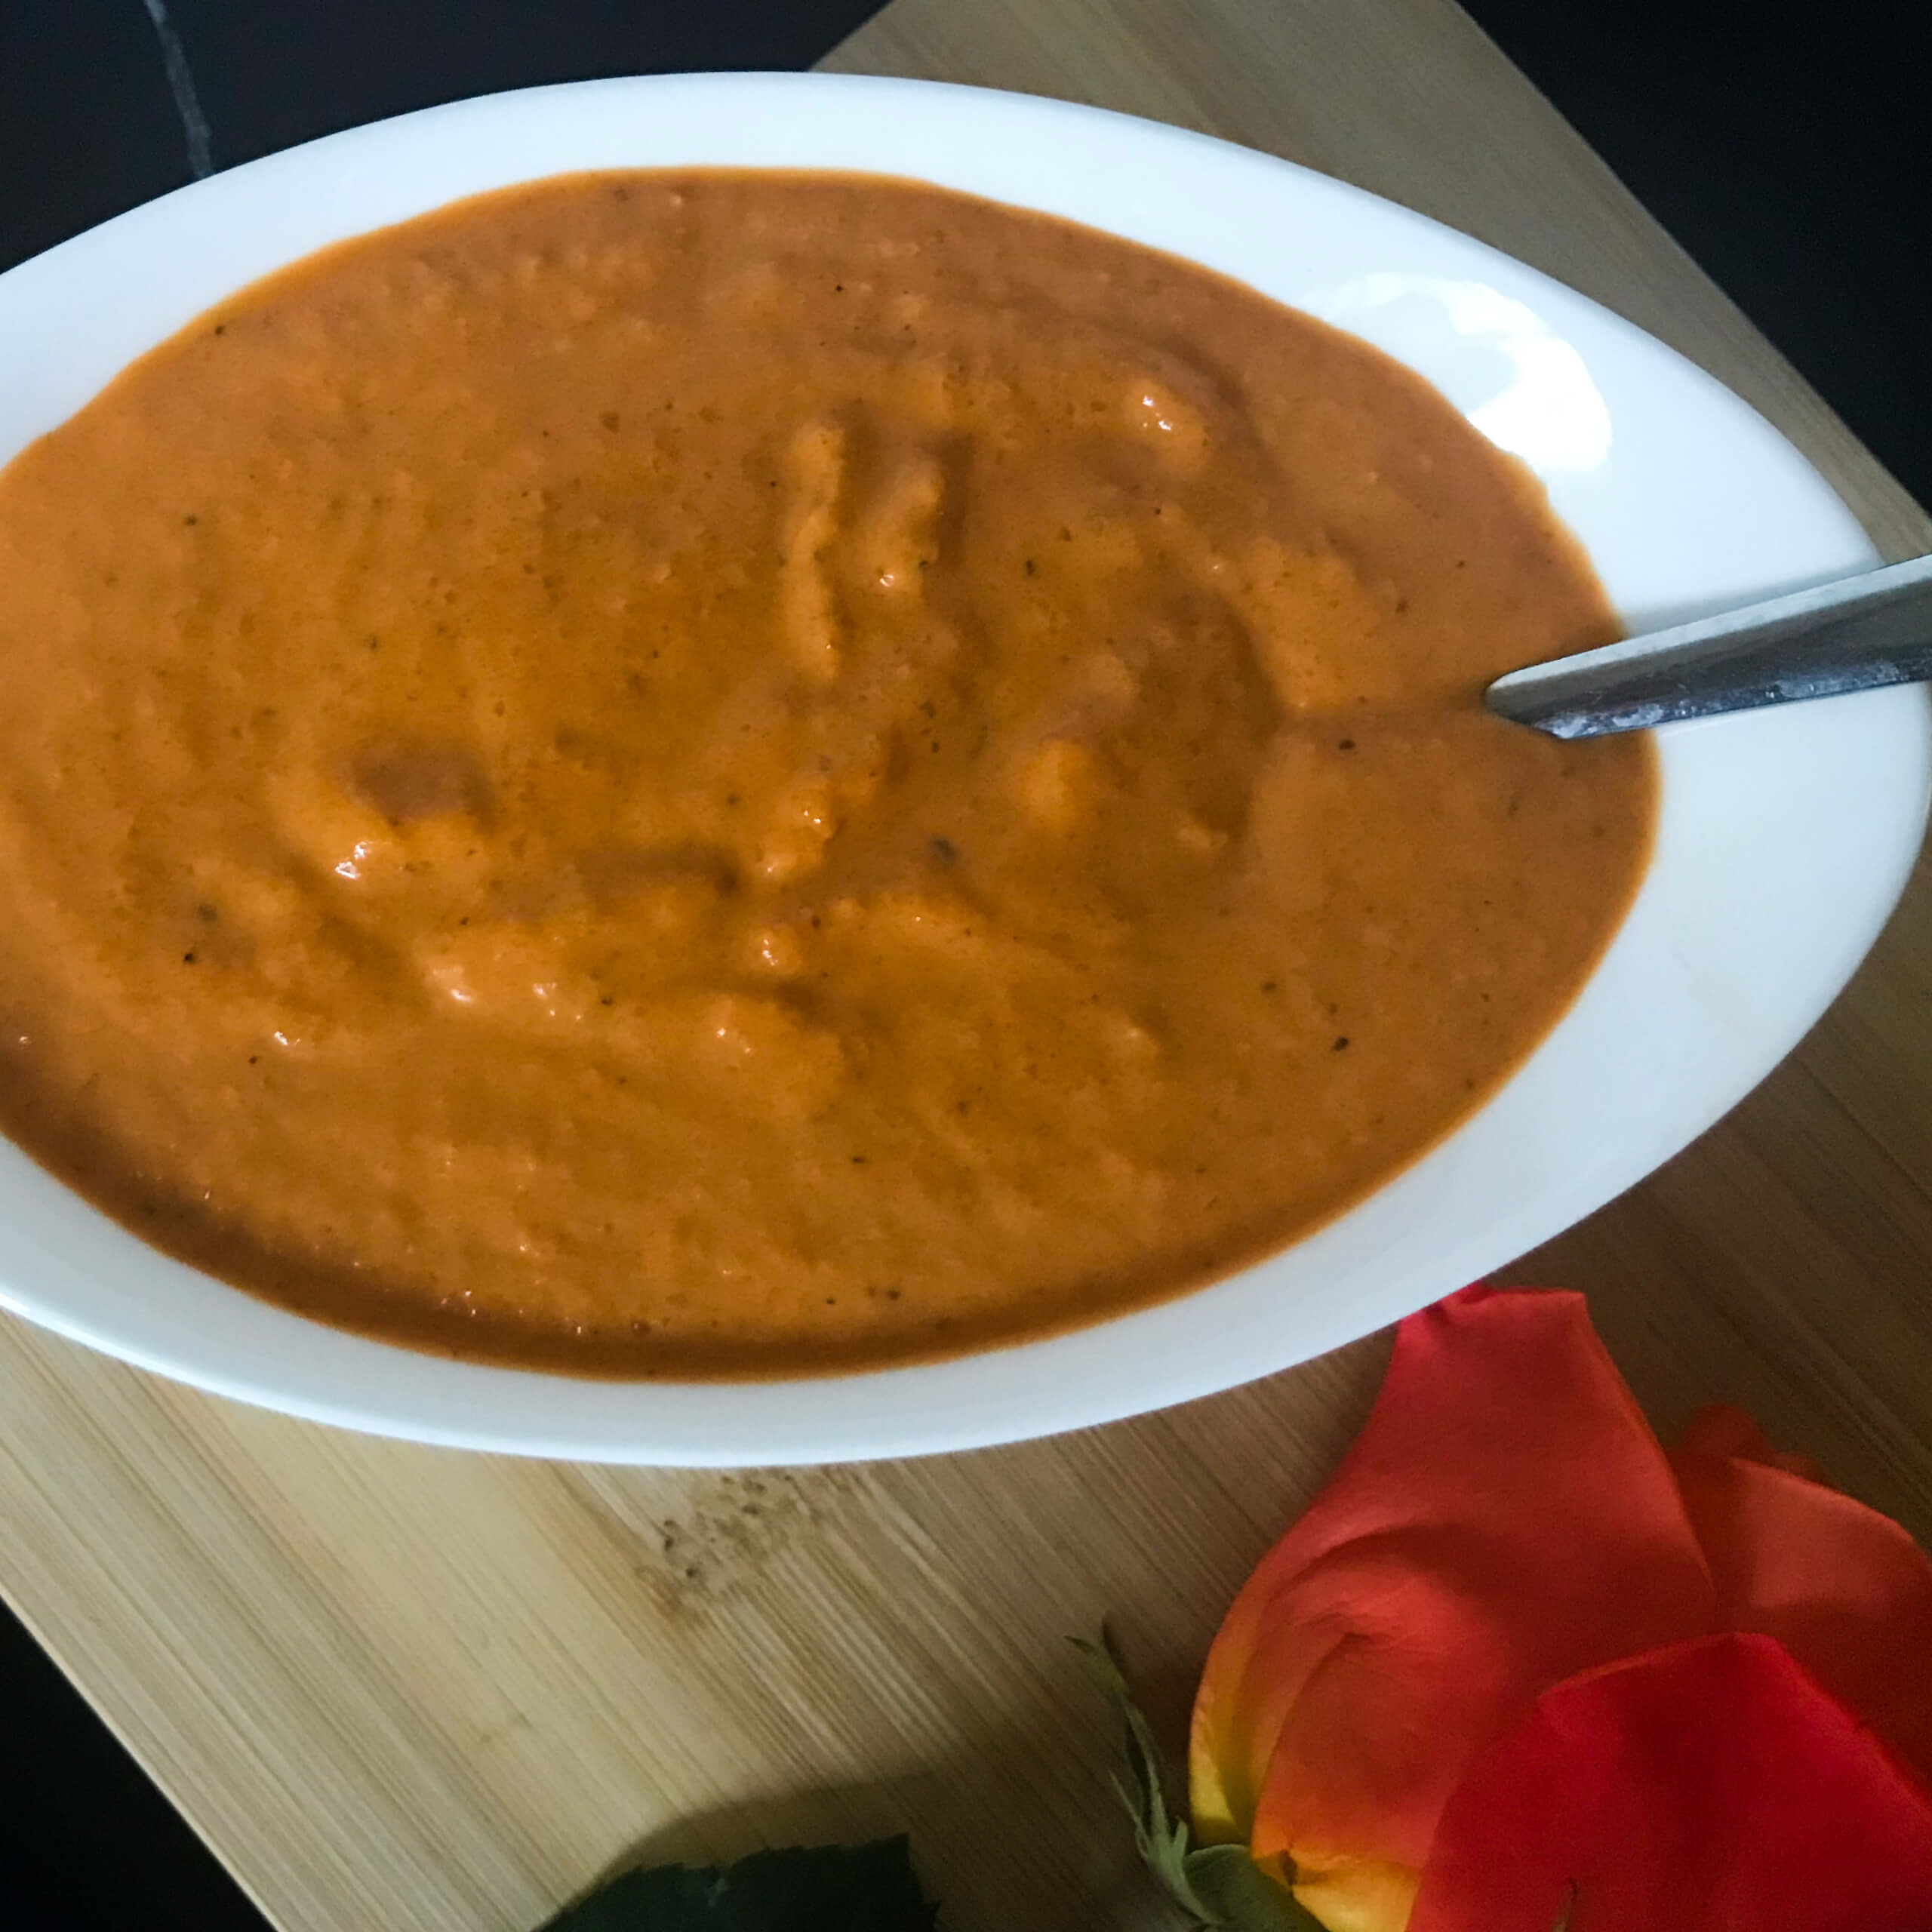 ranchero sauce in serving bowl